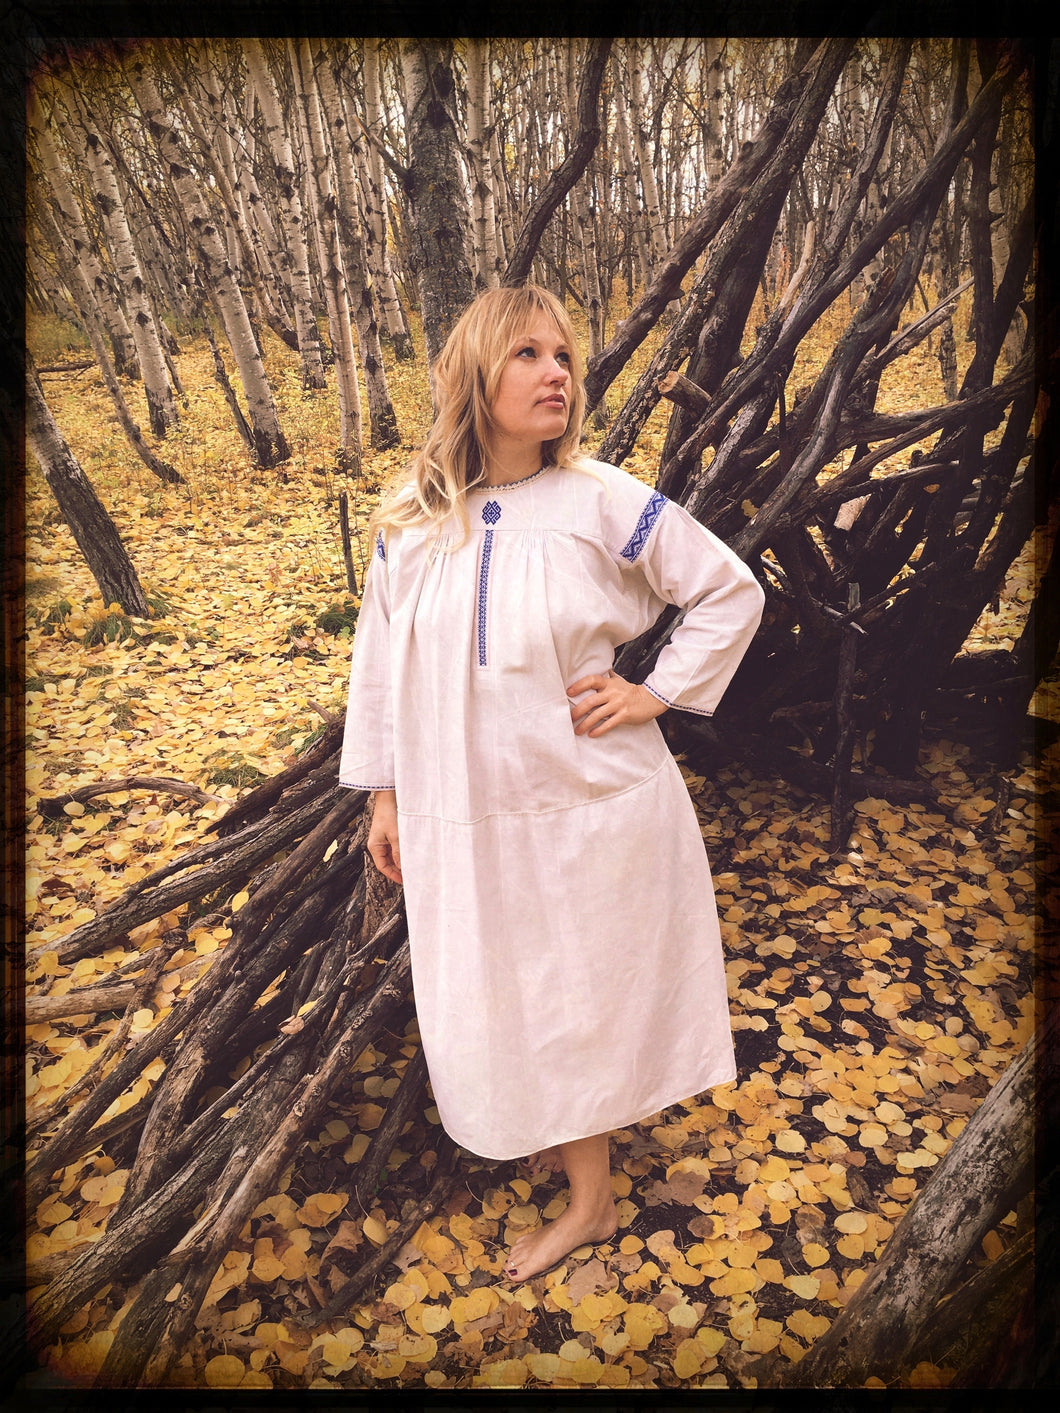 RARE! Vintage 30's Ukrainian Homespun Linen Blue Embroidered Dress (Vyshyvanka)